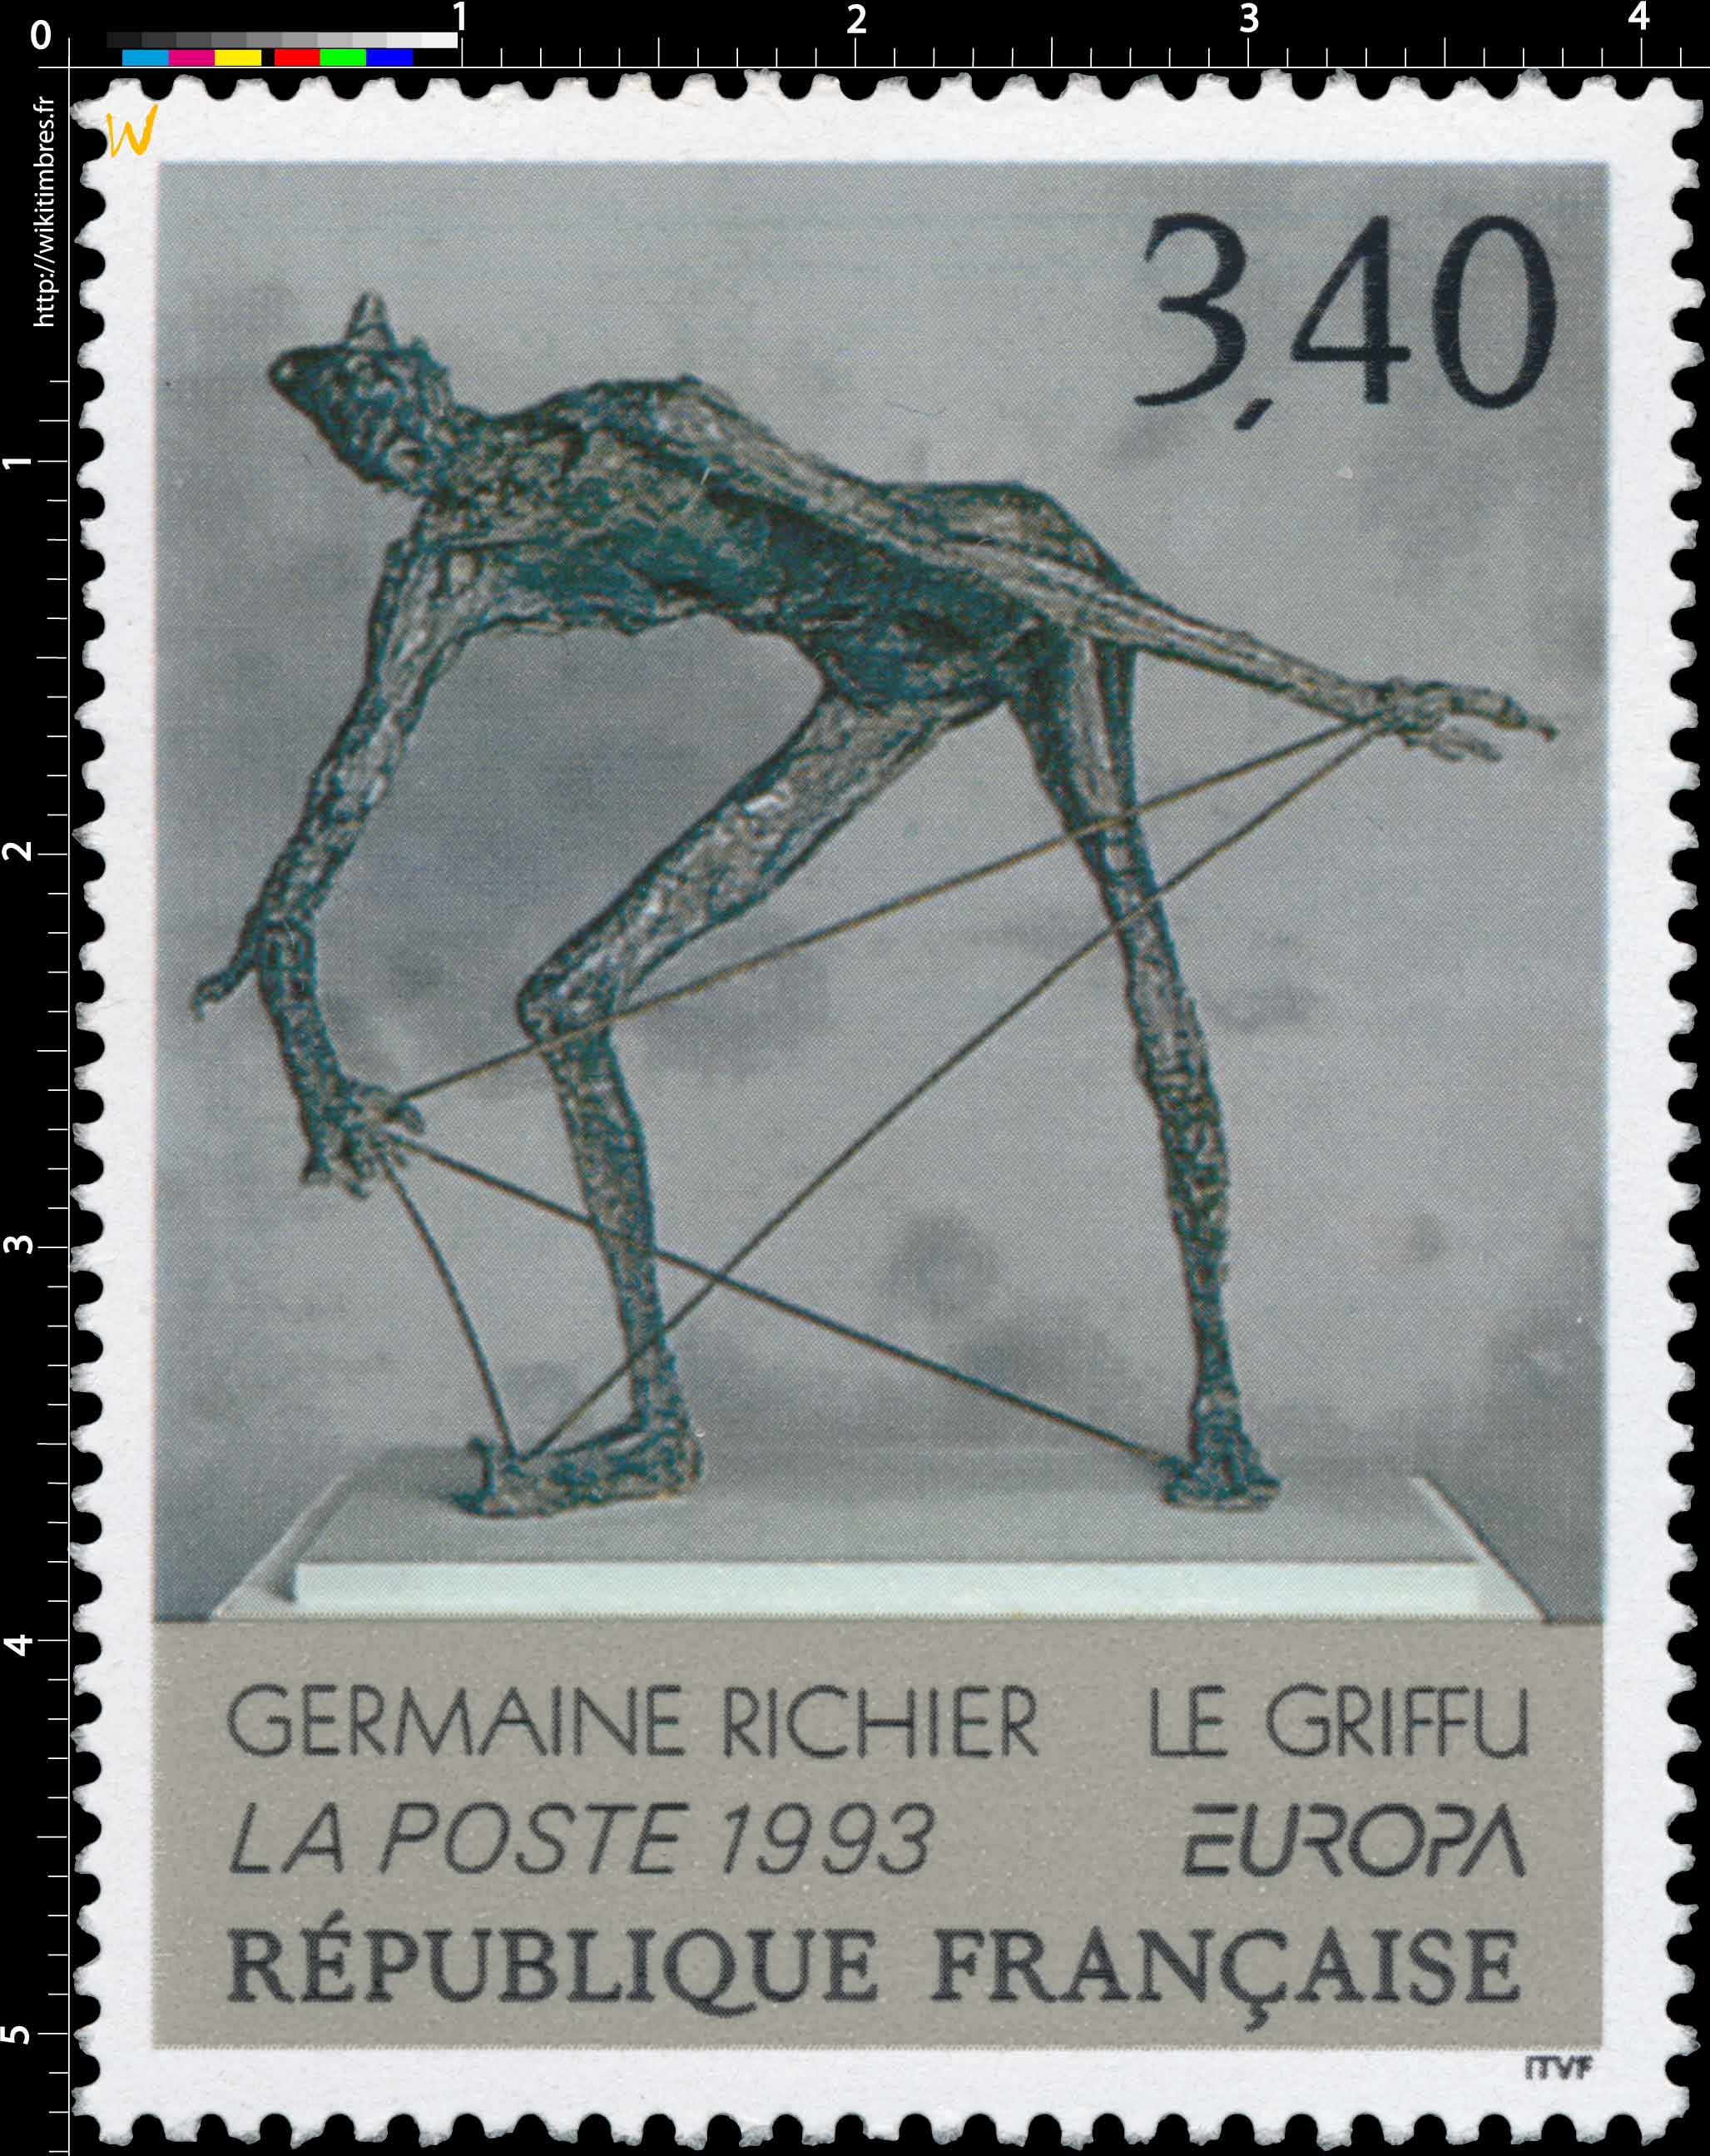 1993 EUROPA GERMAINE RICHIER LE GRIFFU